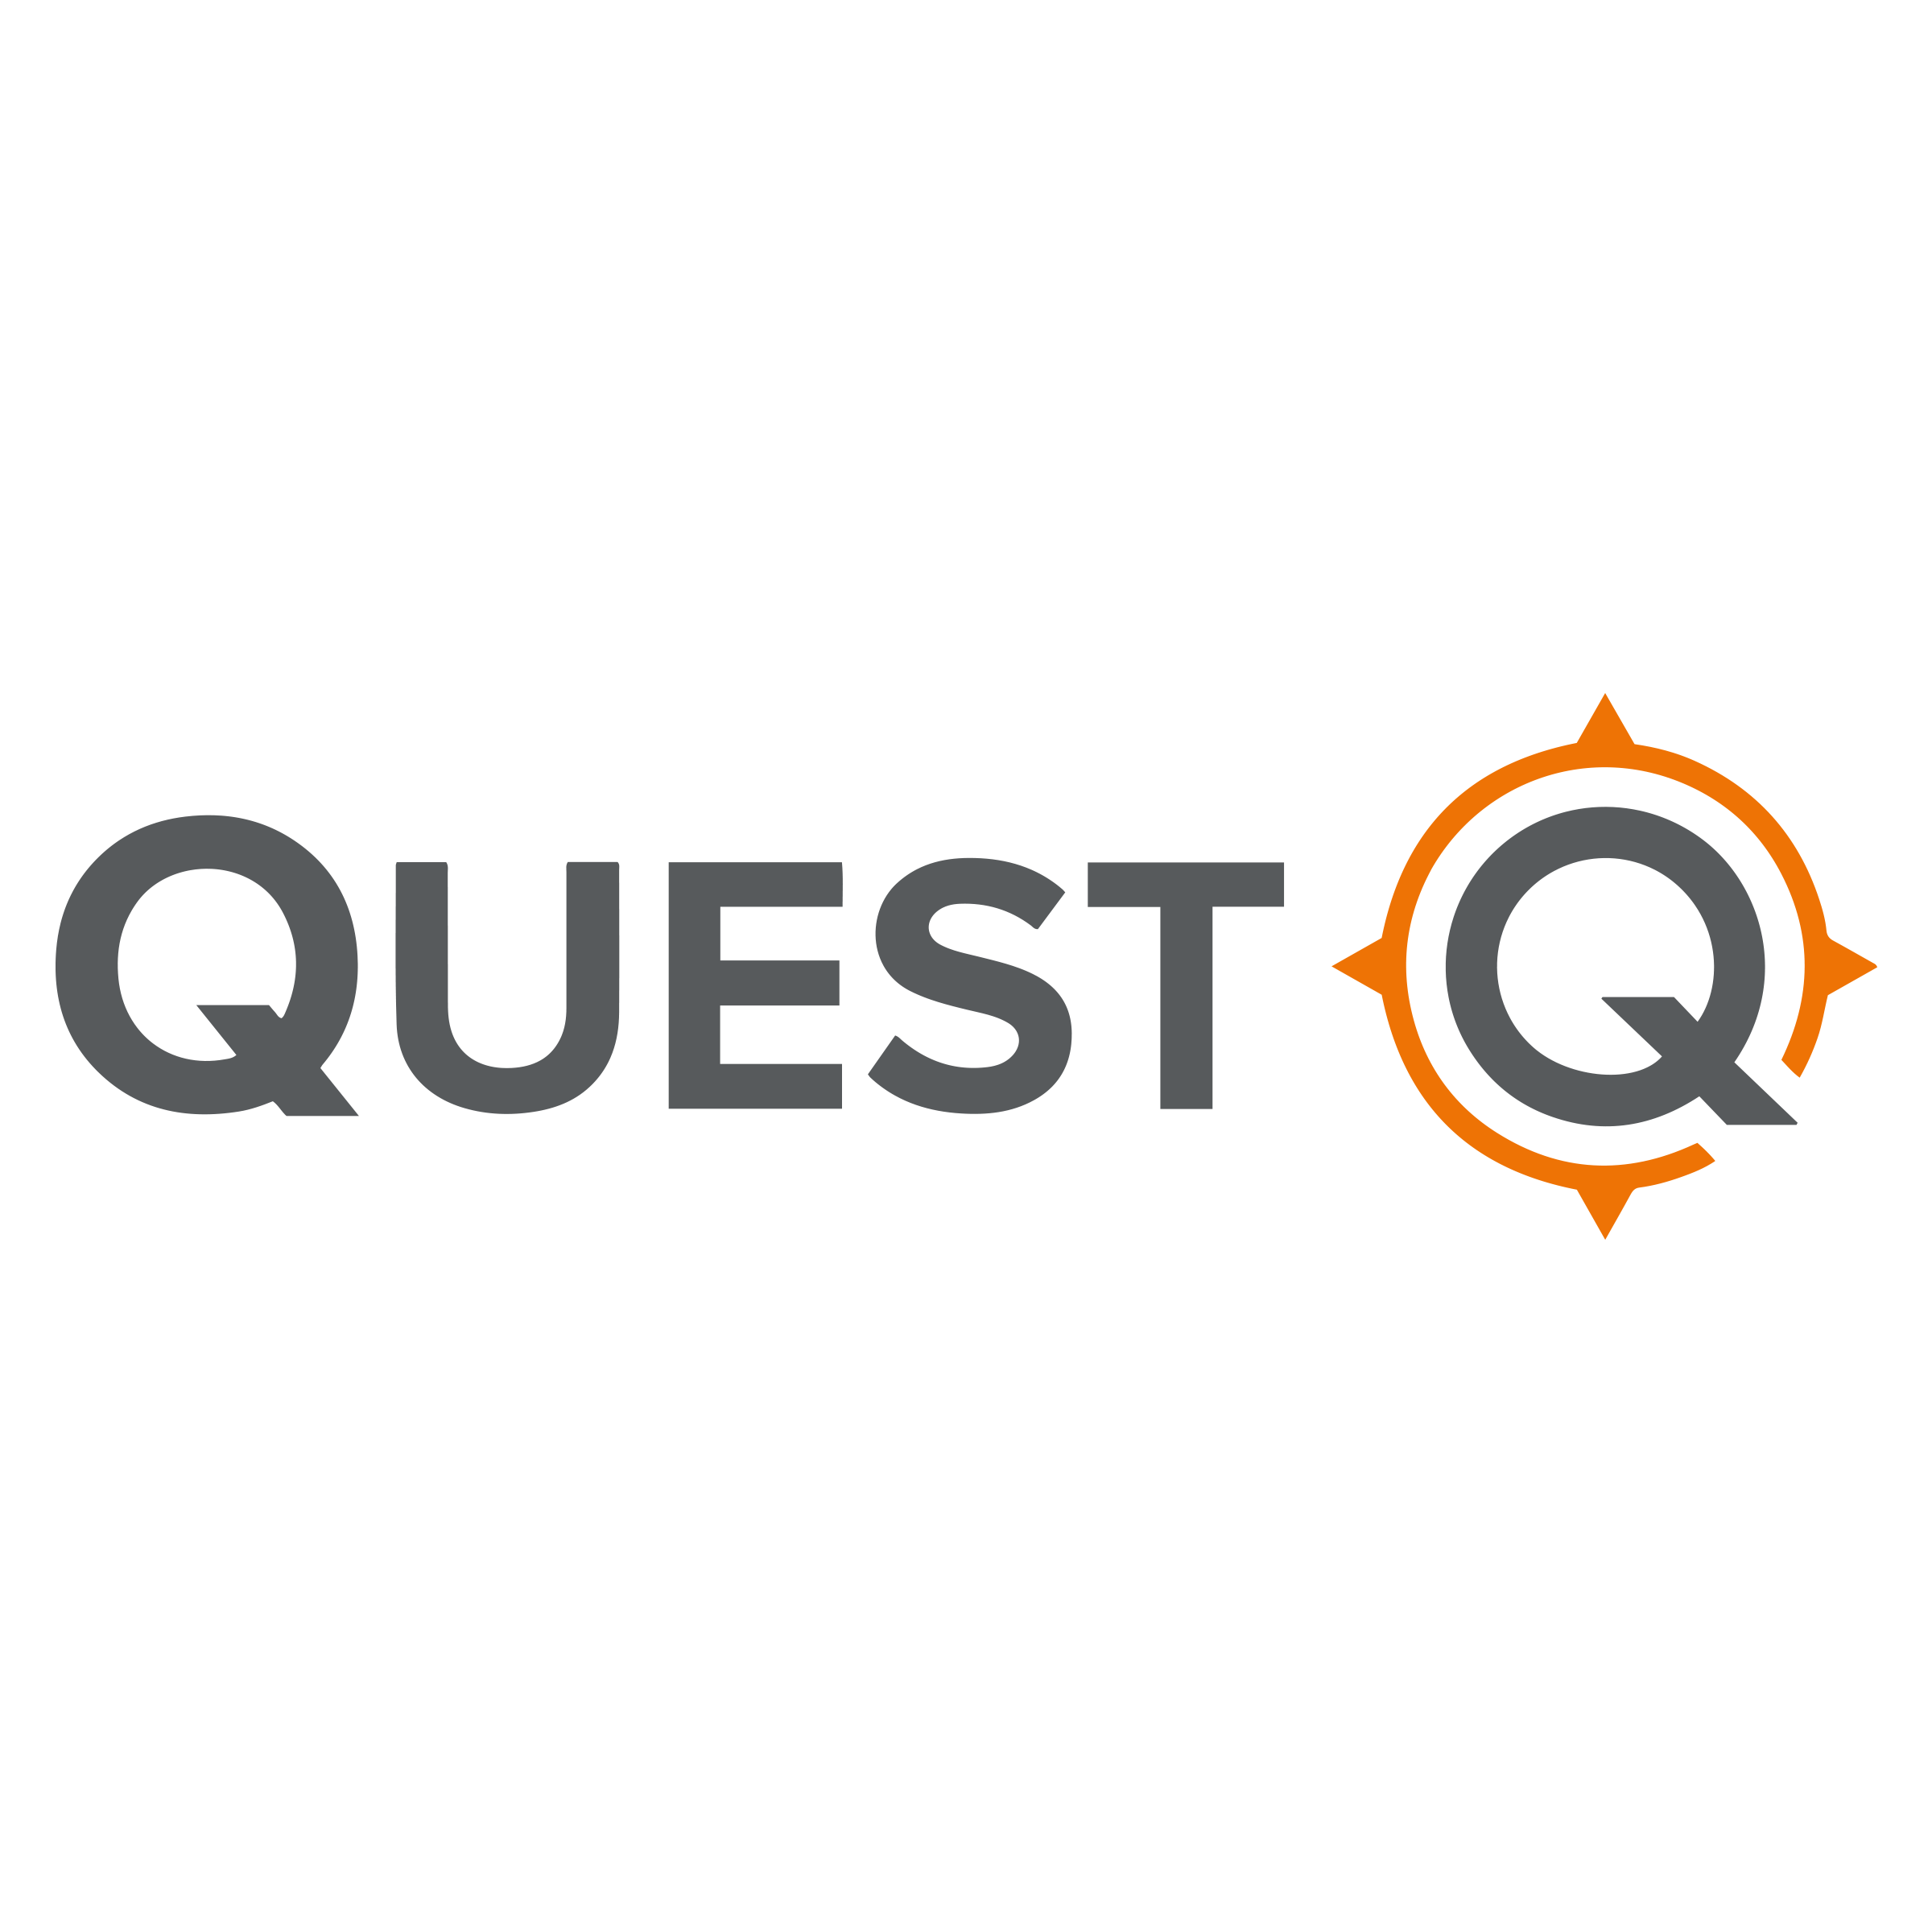 QUEST Logo